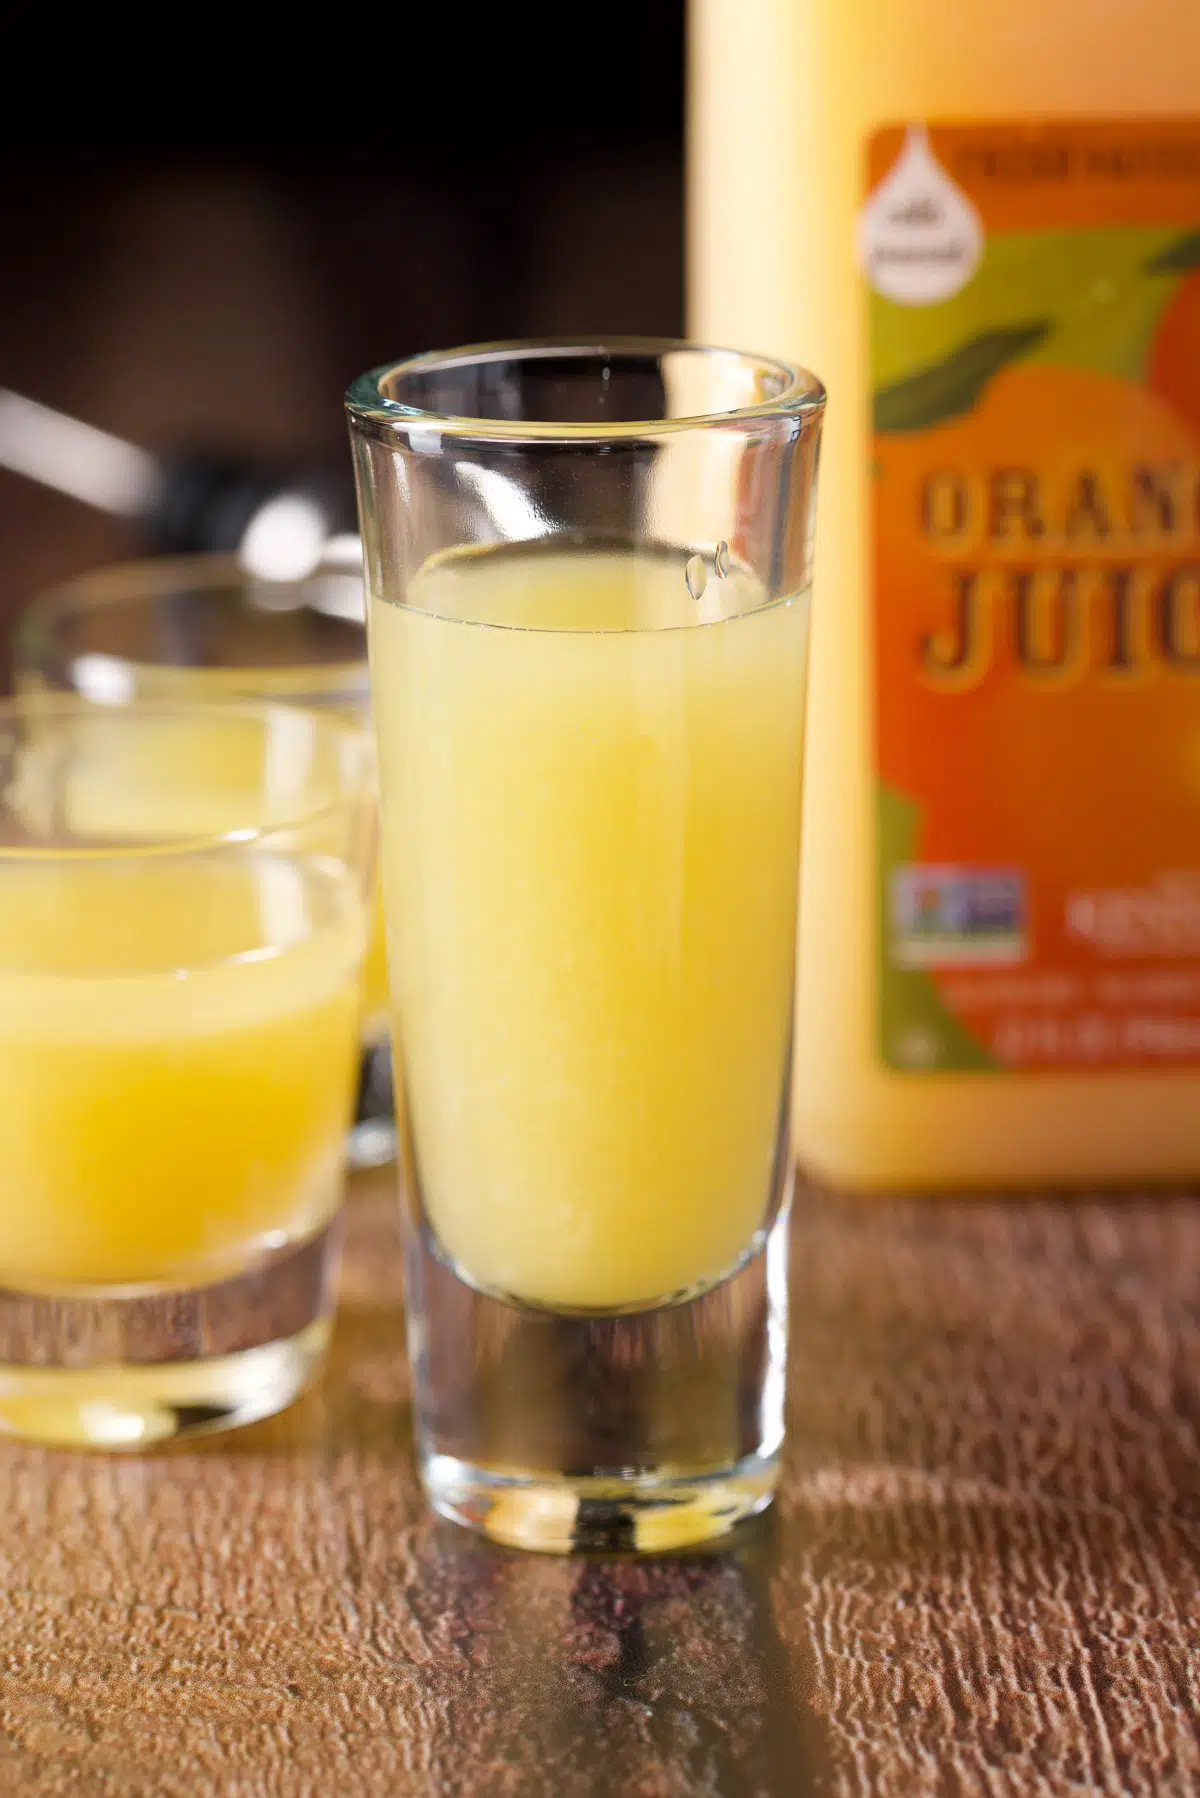 Orange juice poured into the glasses